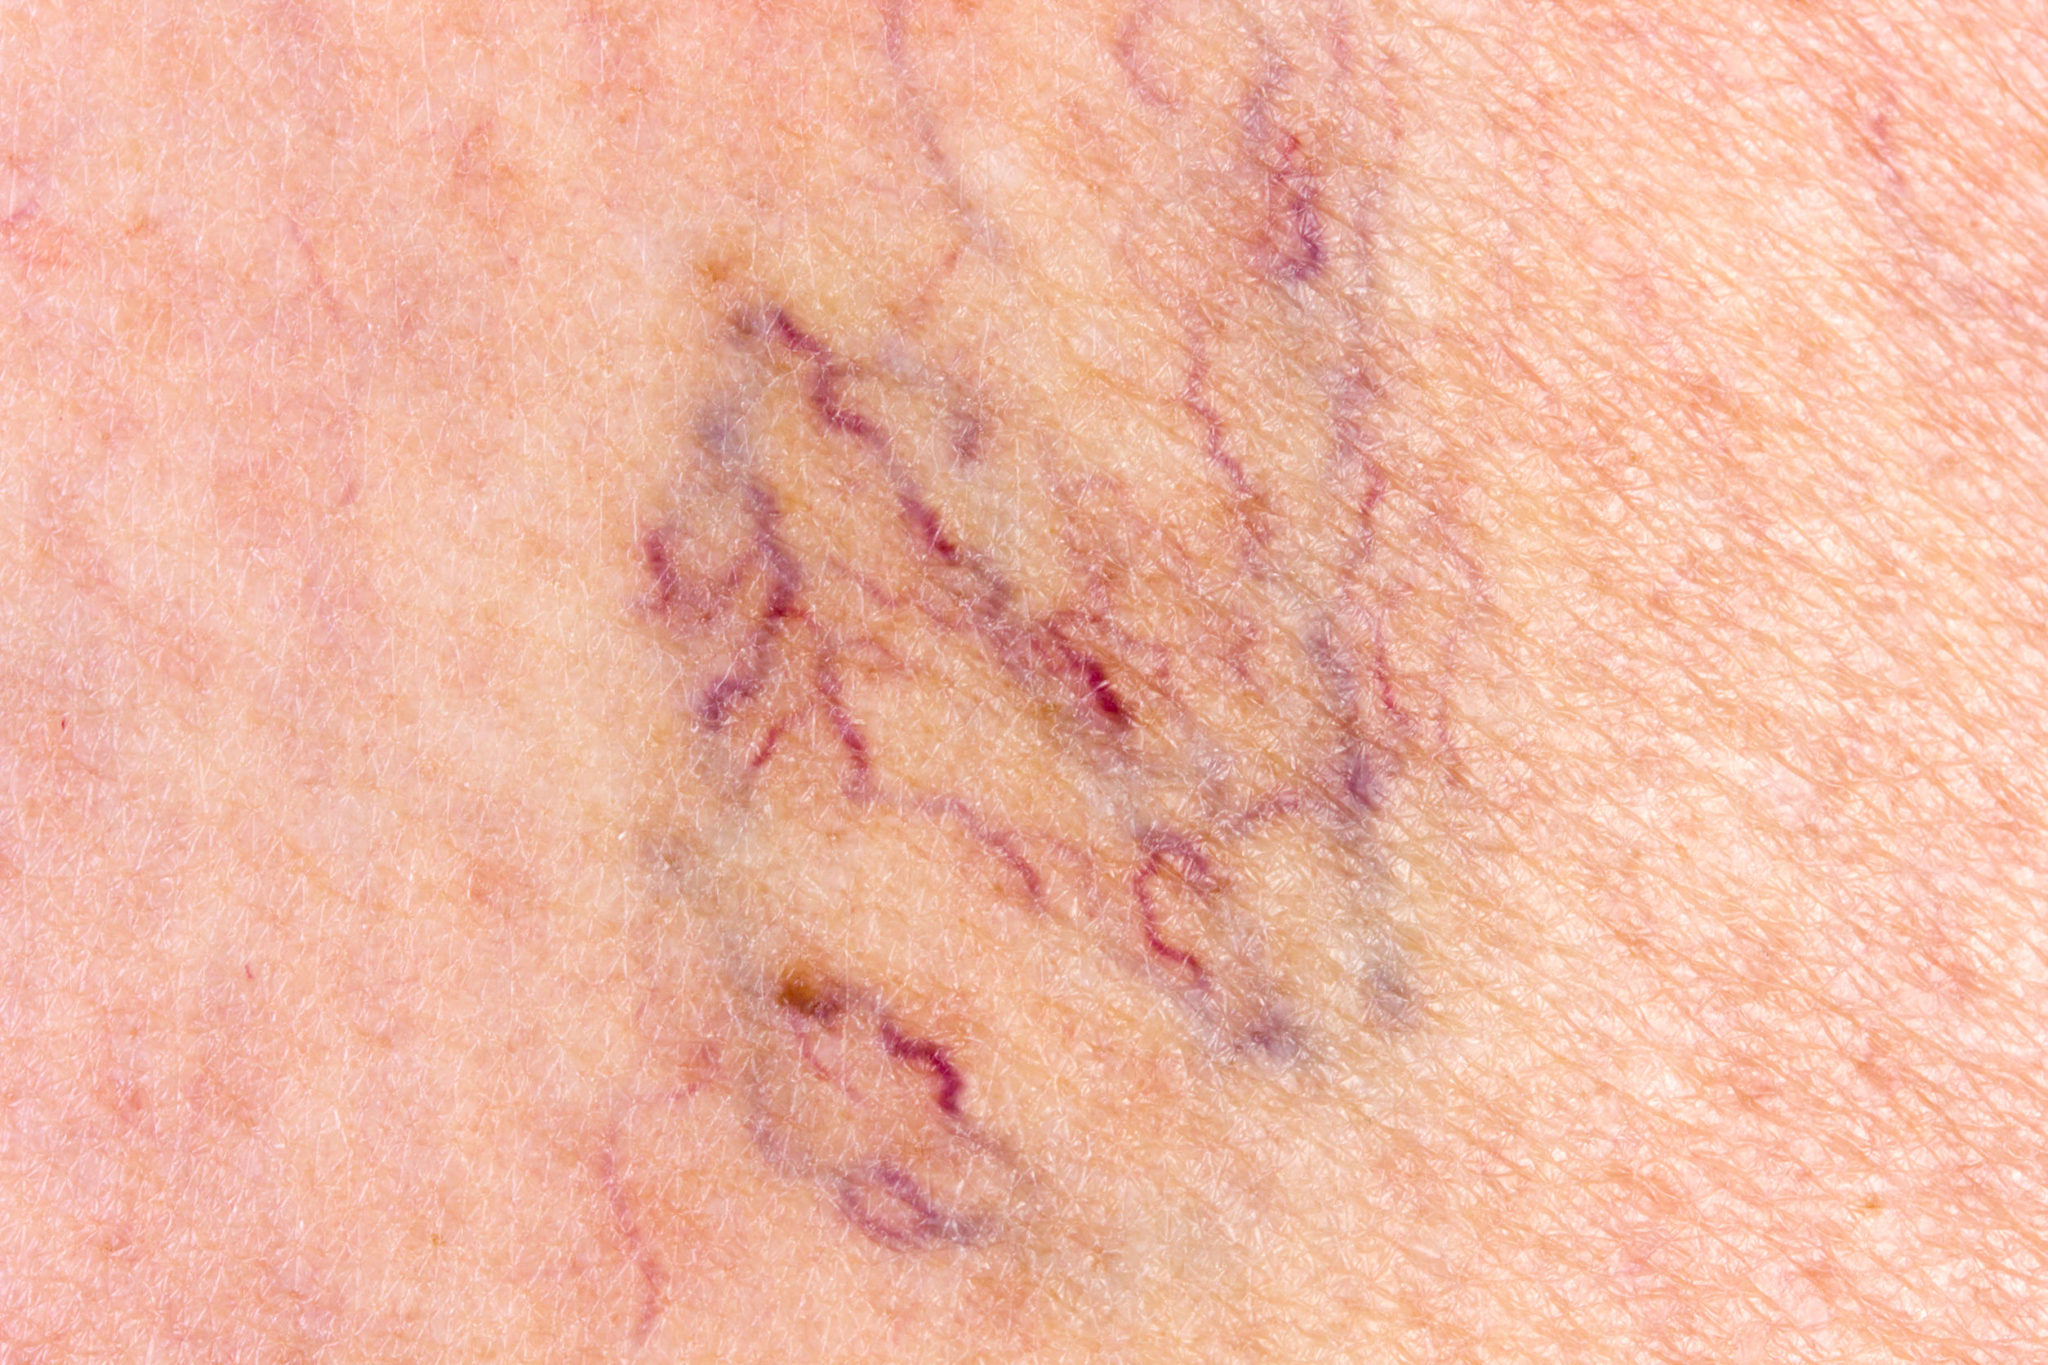 Close-up of leg with varicose veins